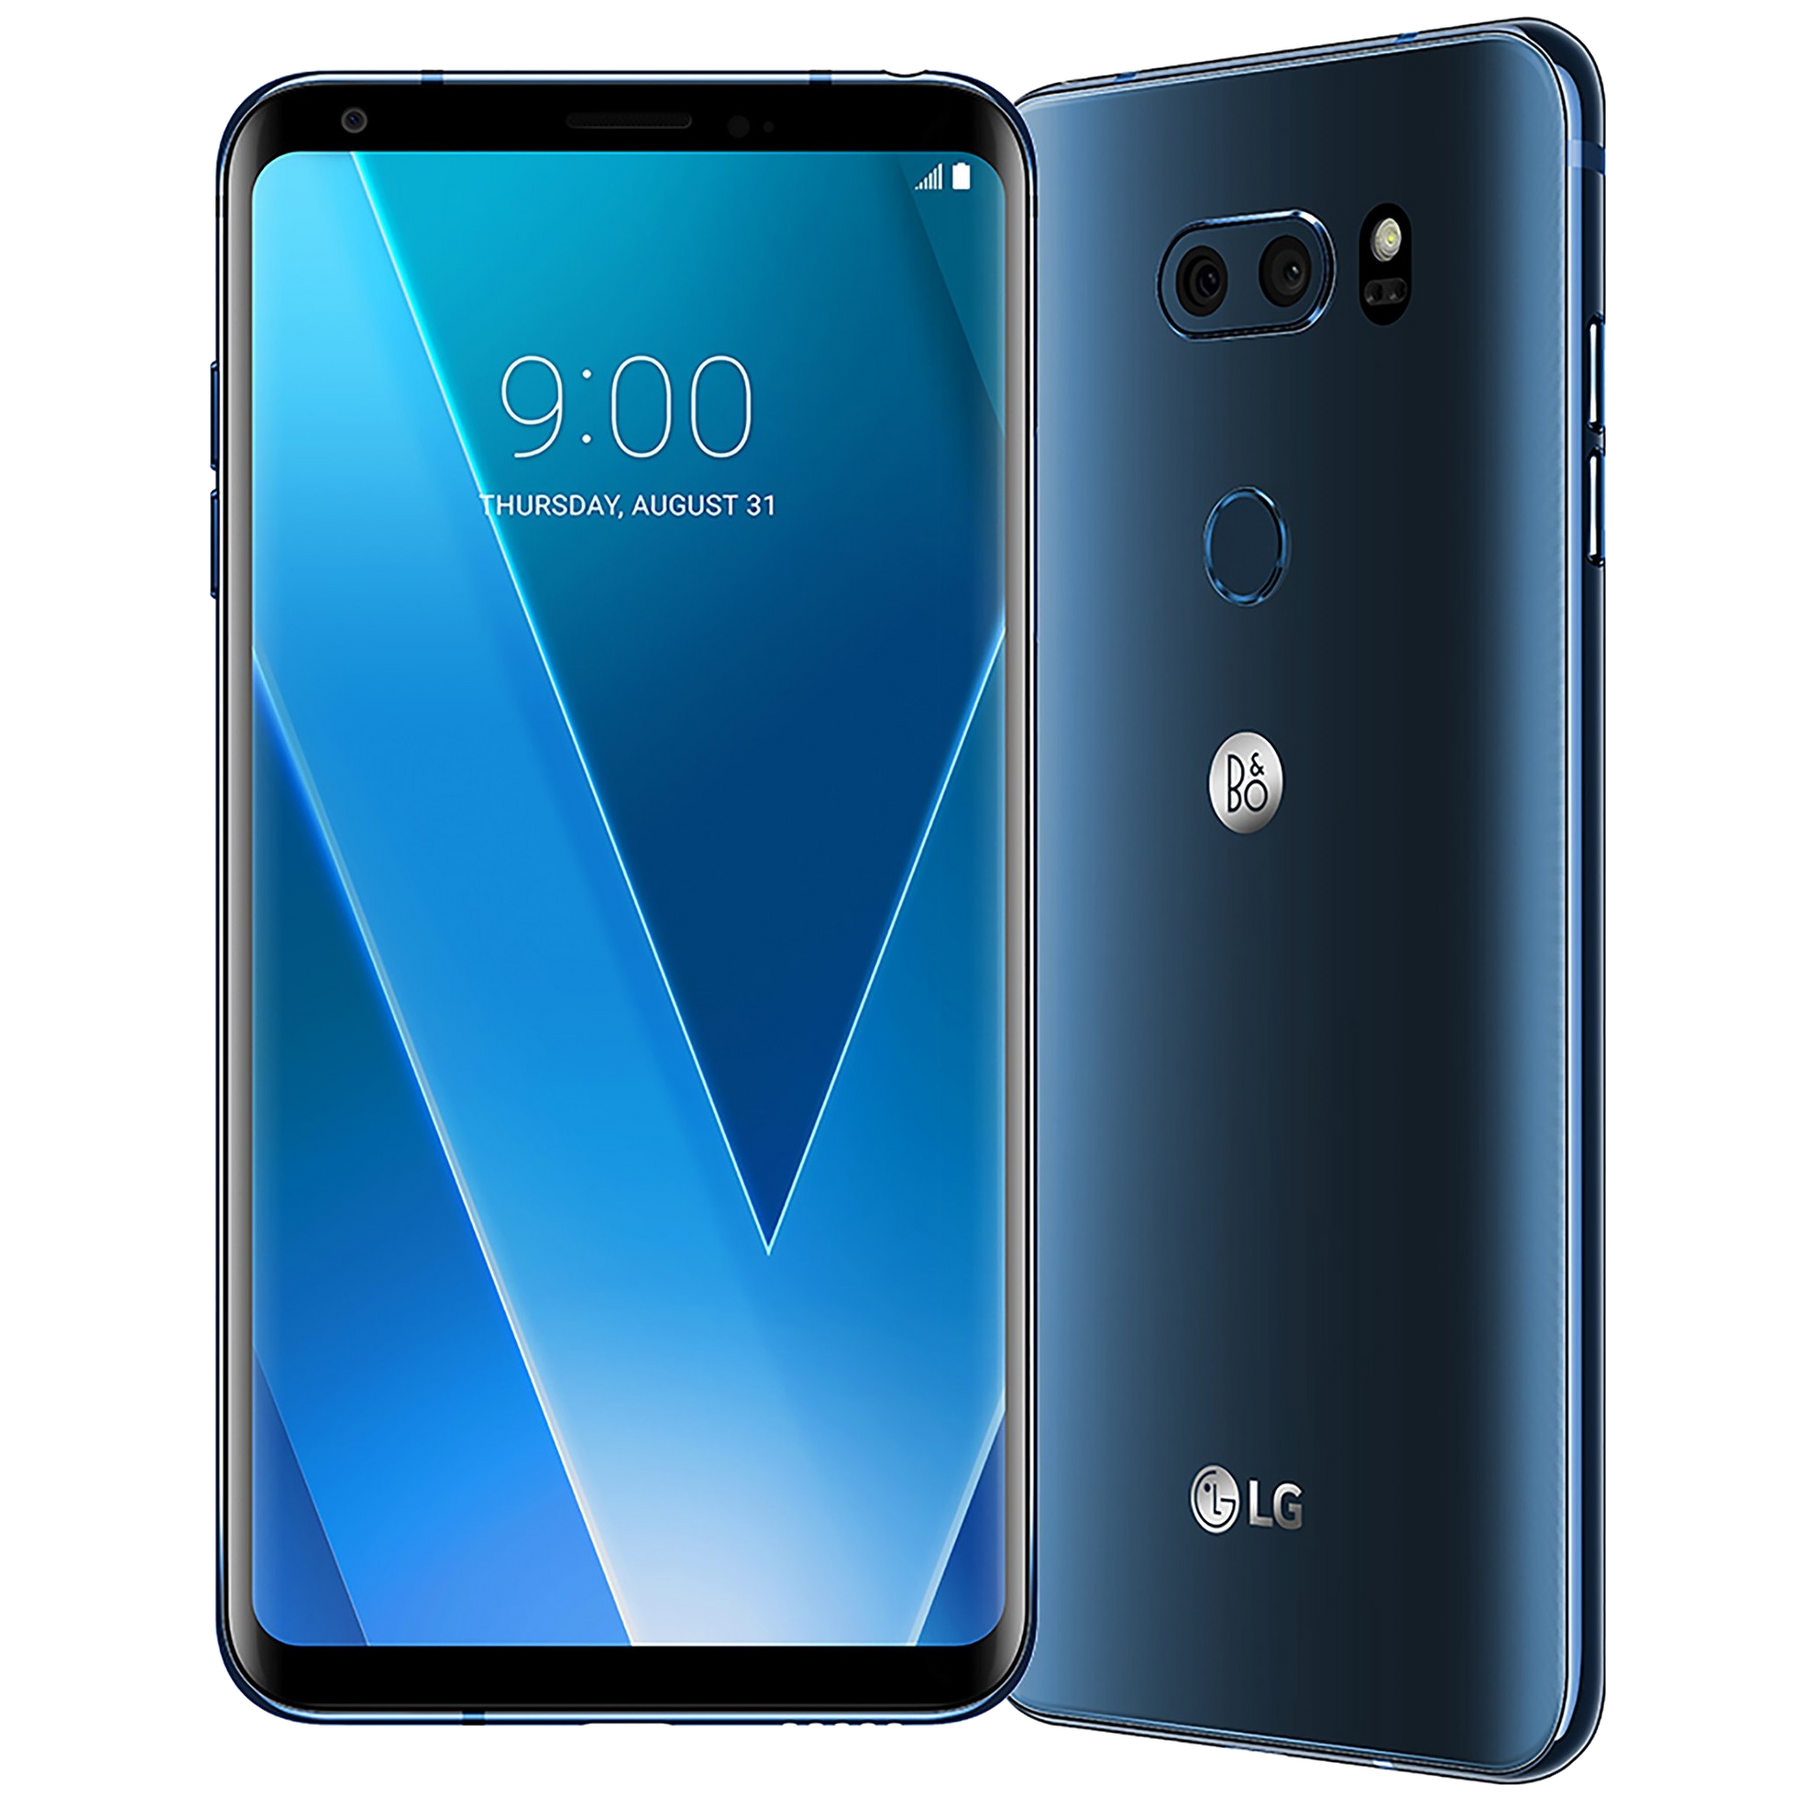 LG V30 blau - Onhe Vertrag